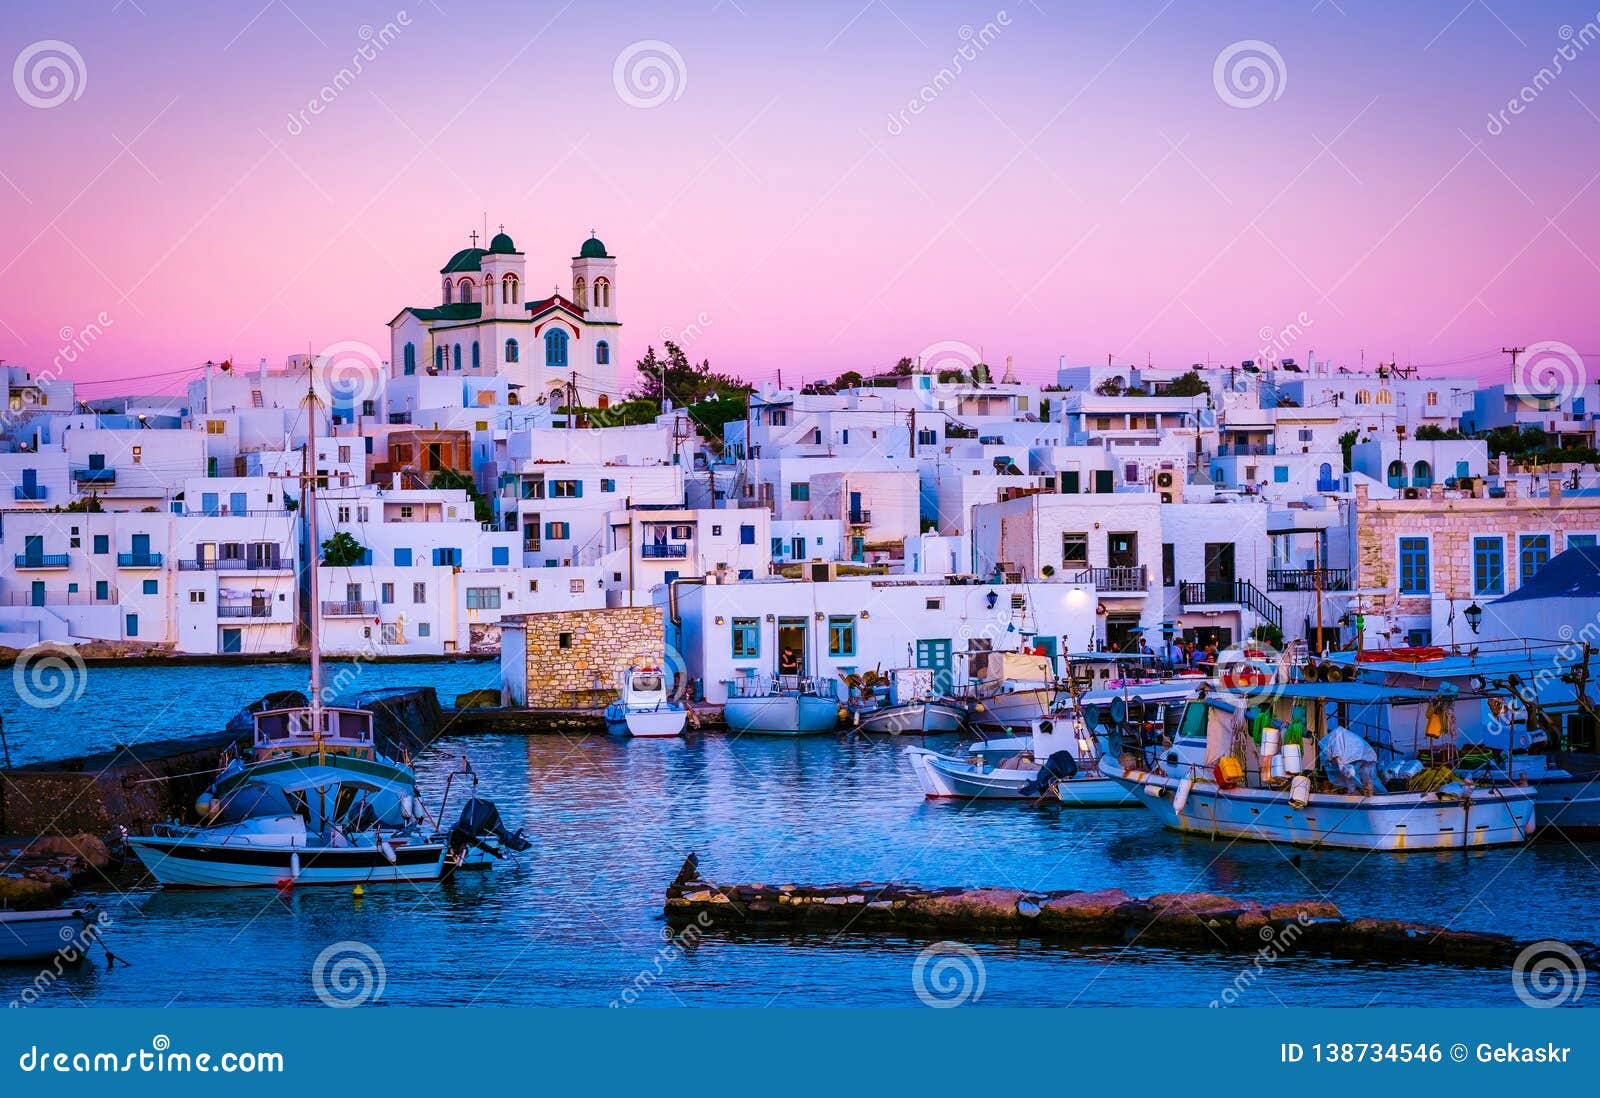 evening scenery of greek island paros